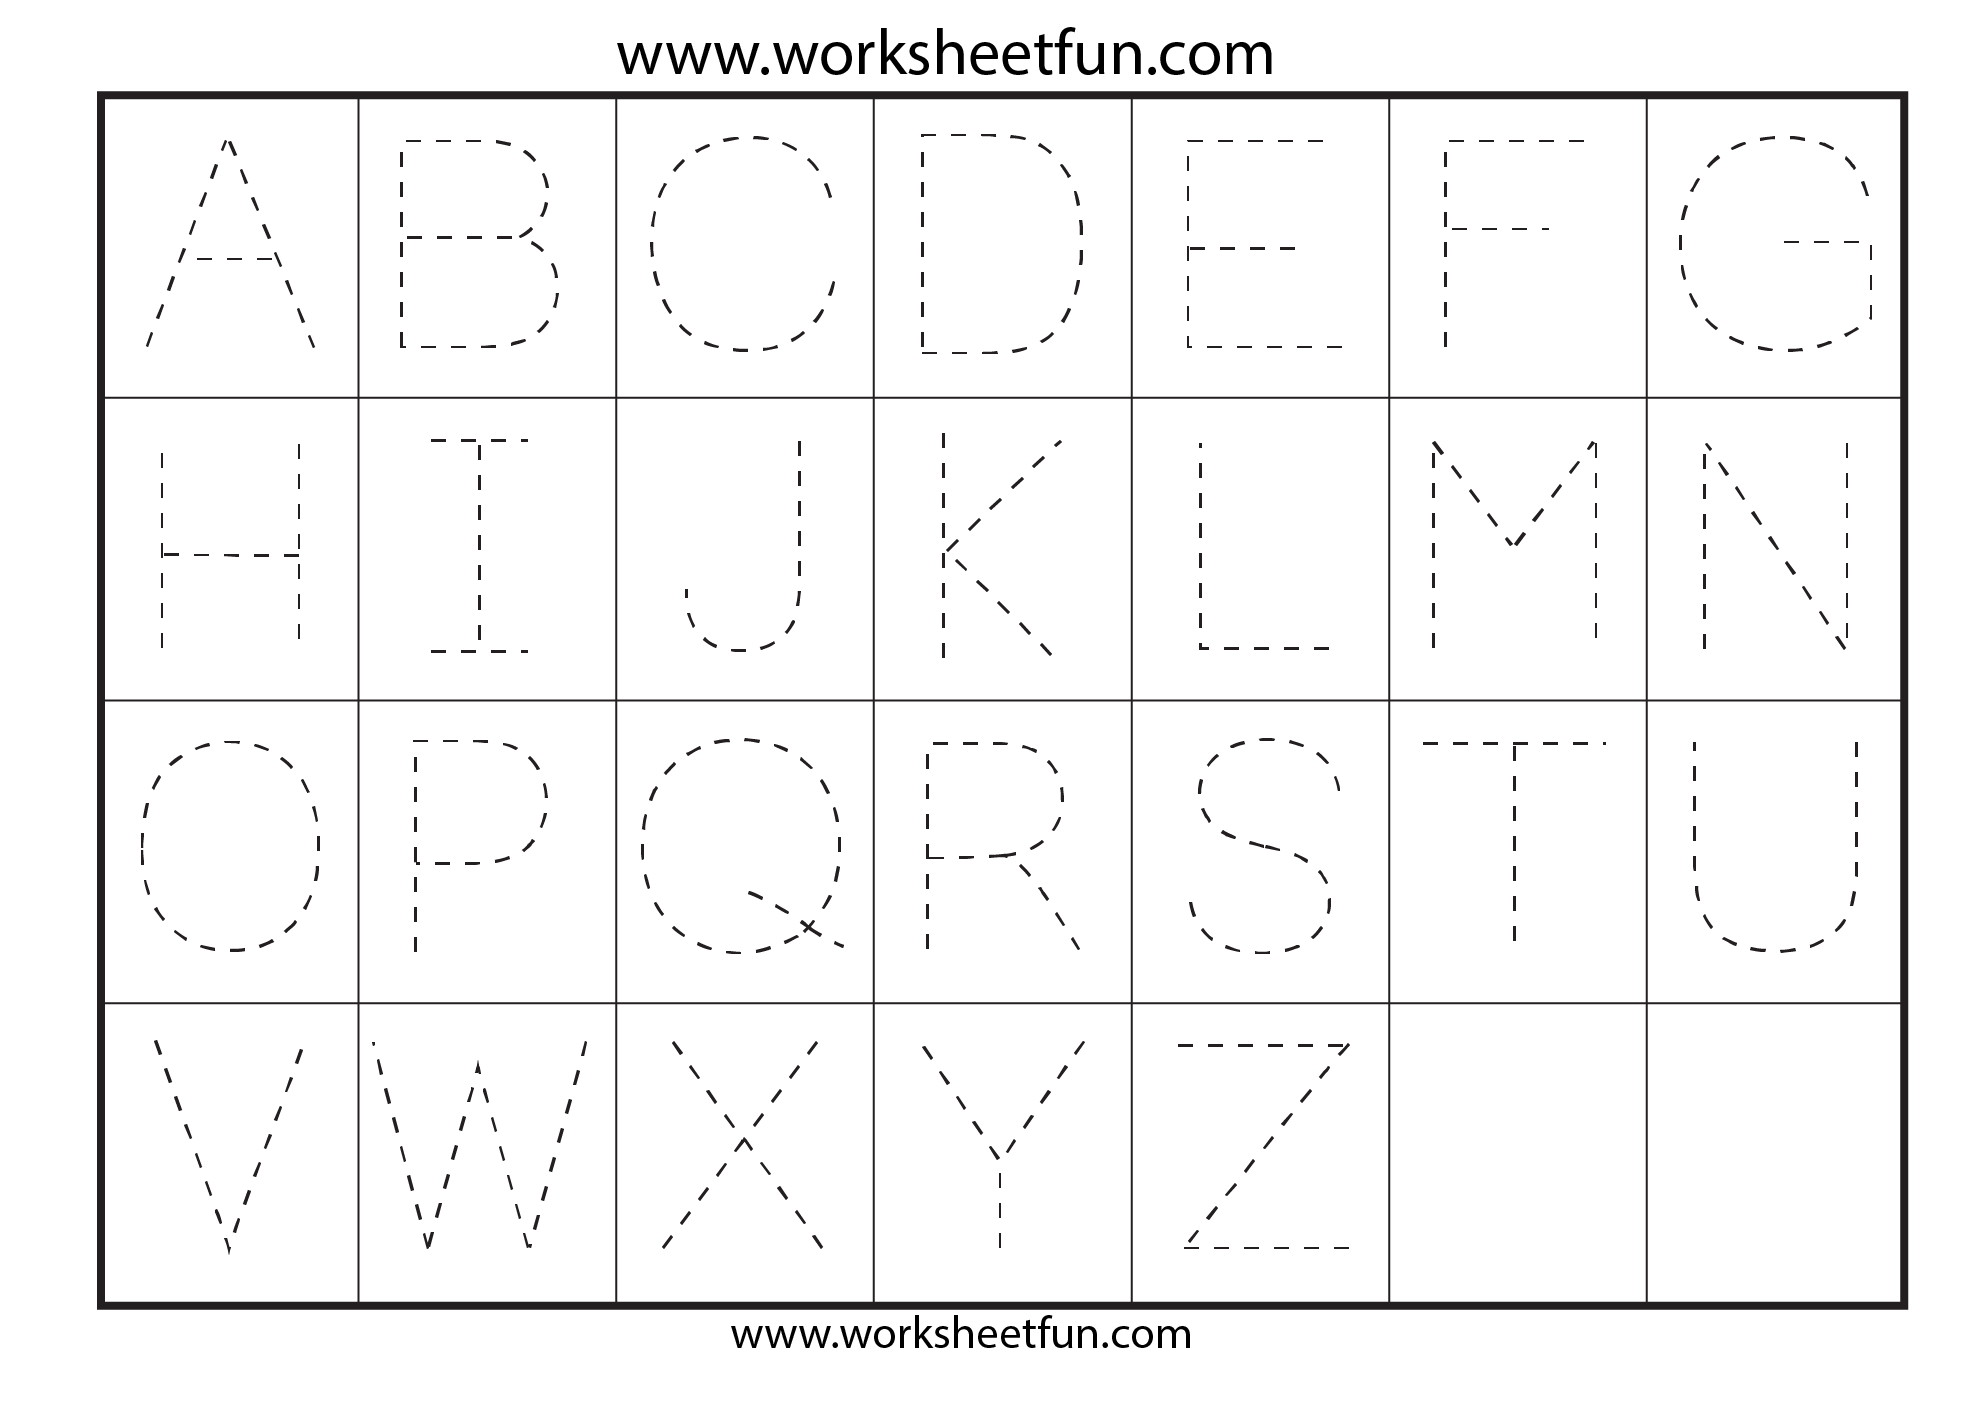 worksheetfun-free-printable-worksheets